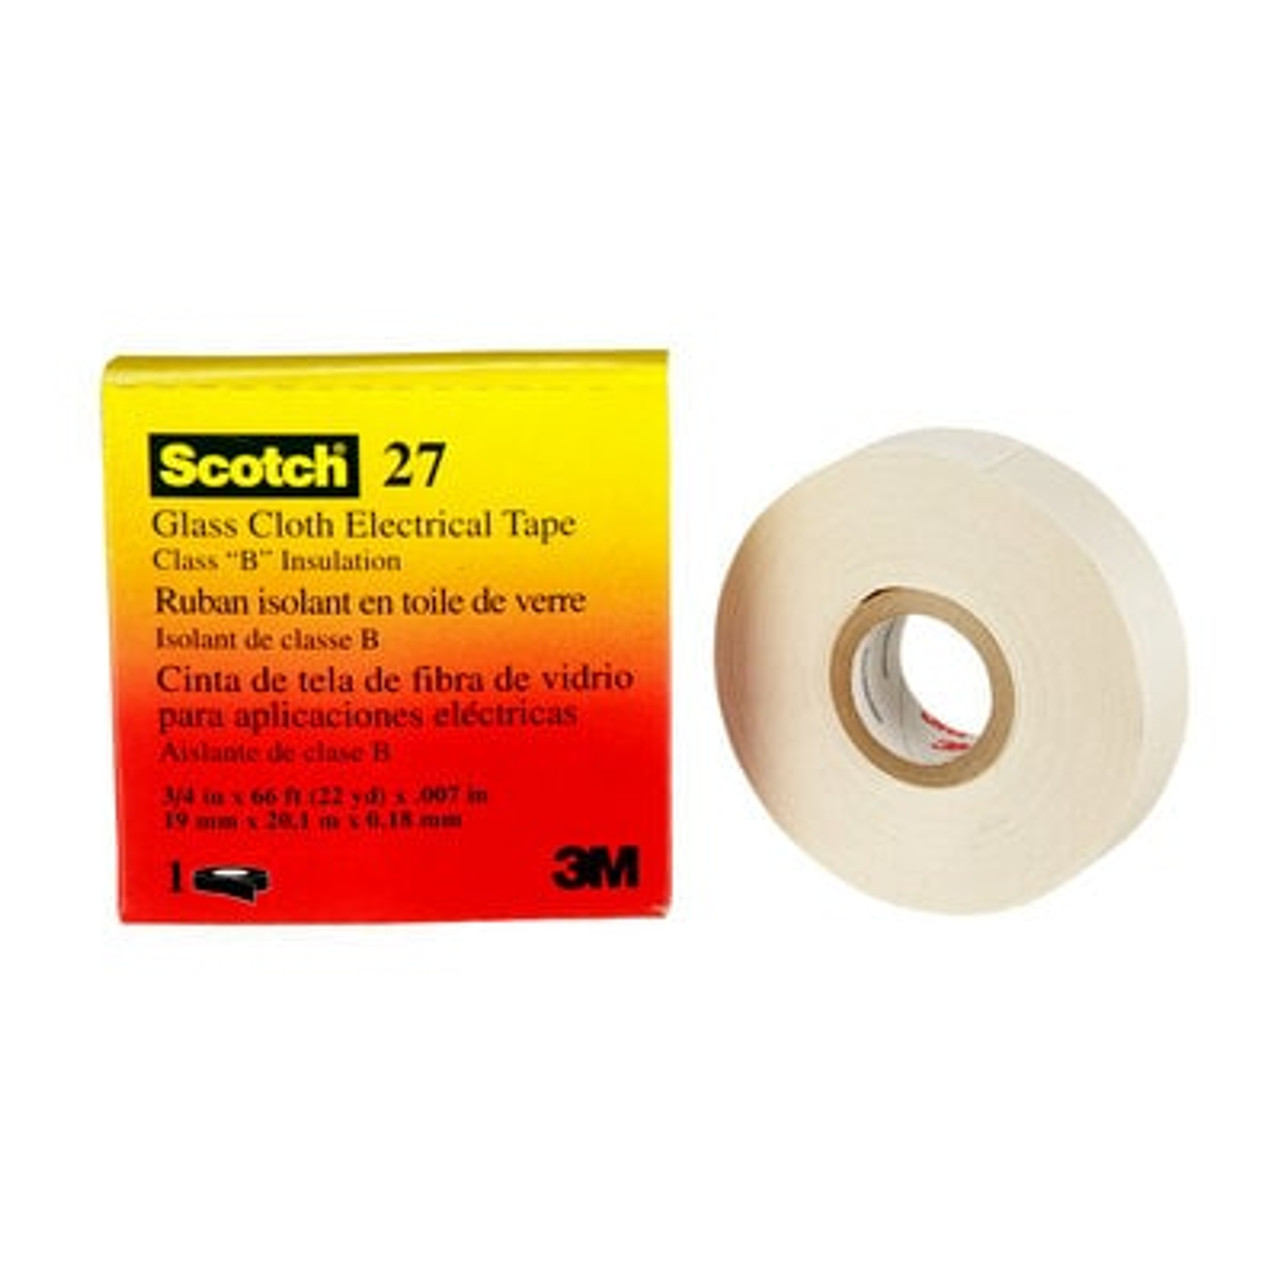 3M™ Scotch® Glass Cloth Electrical Tape 27 UL recognized | iTapeStore